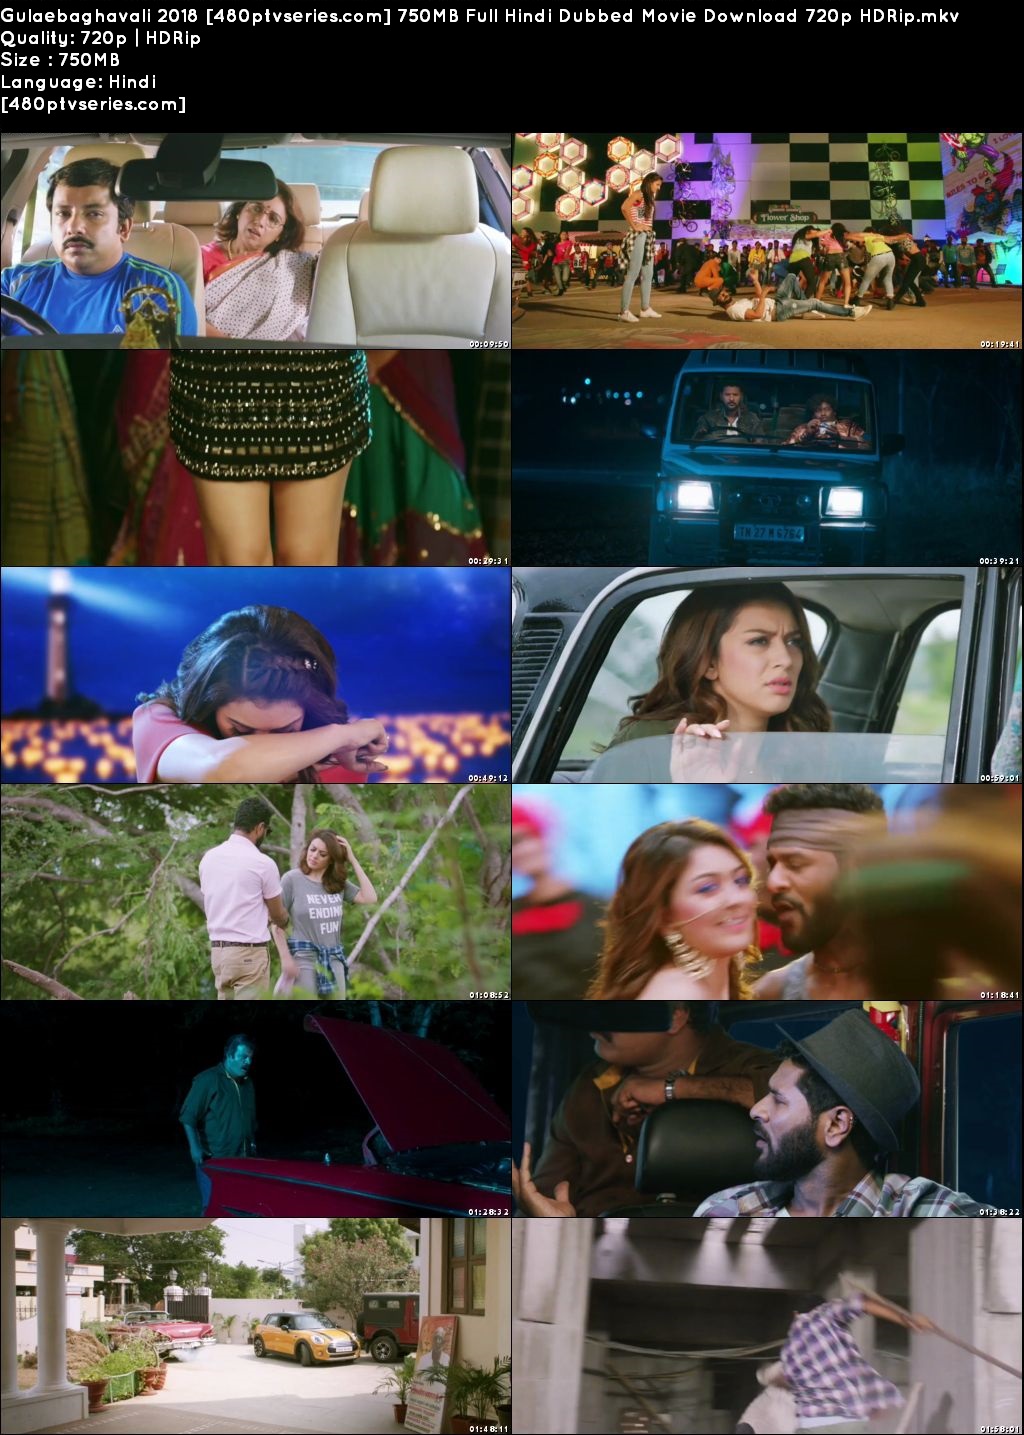 Gulaebaghavali 2018 750MB Full Hindi Dubbed Movie Download 720p HDRip